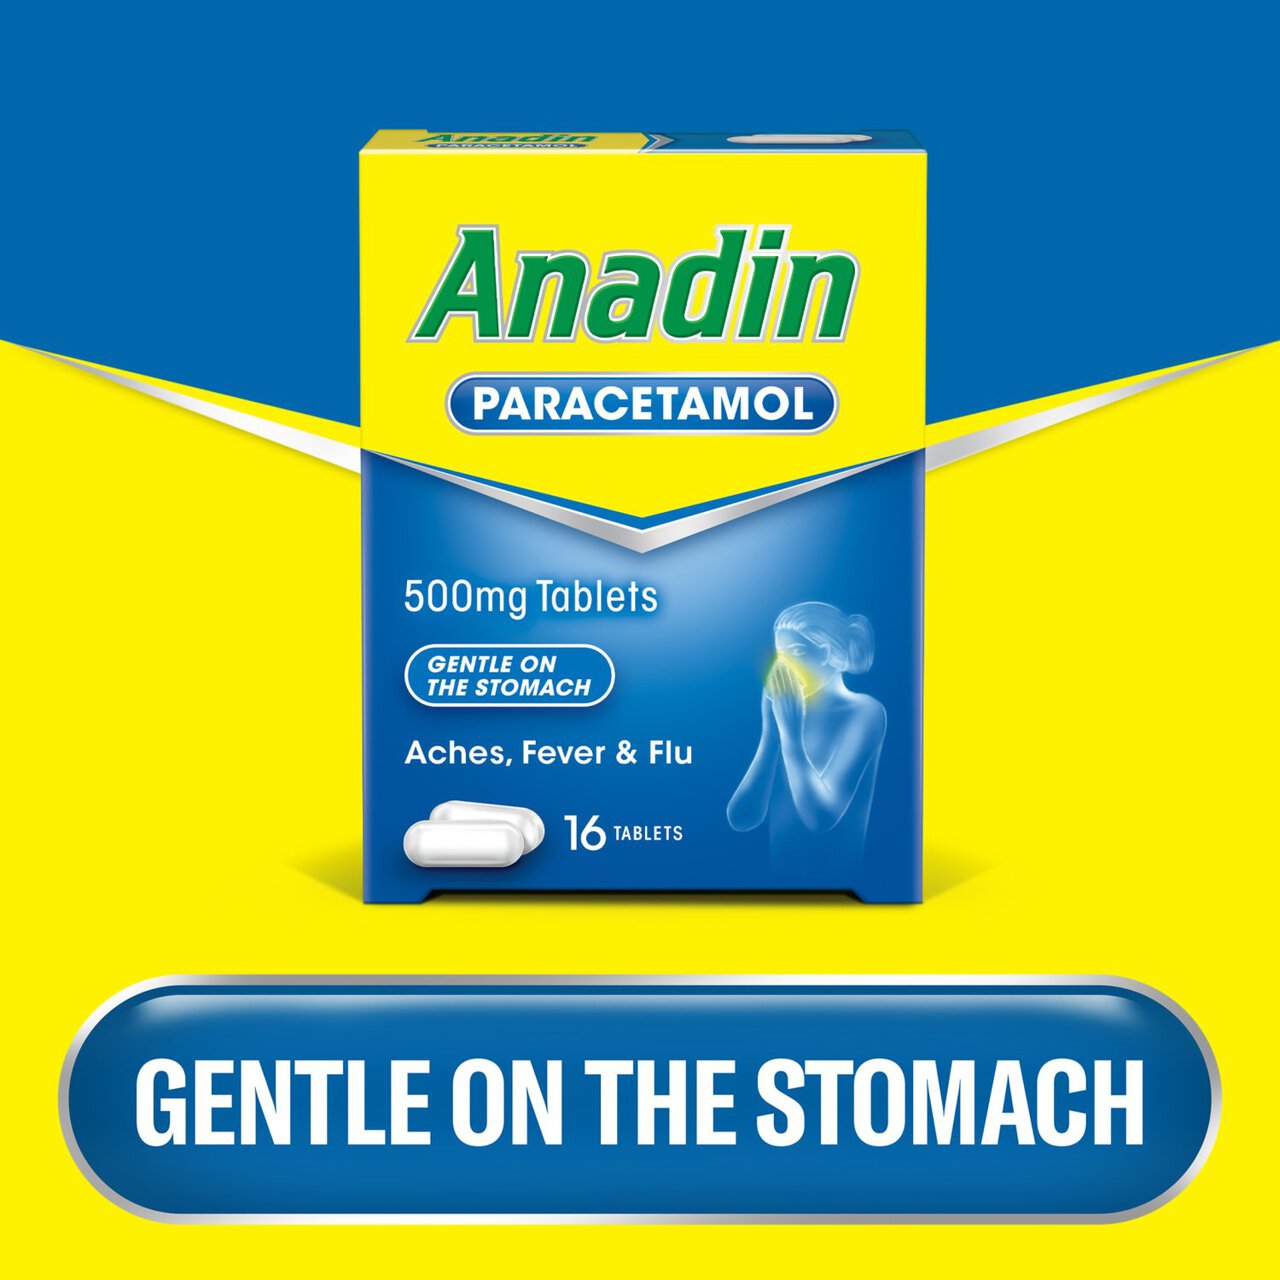 Anadin Paracetamol 500mg Tablets 16 per pack